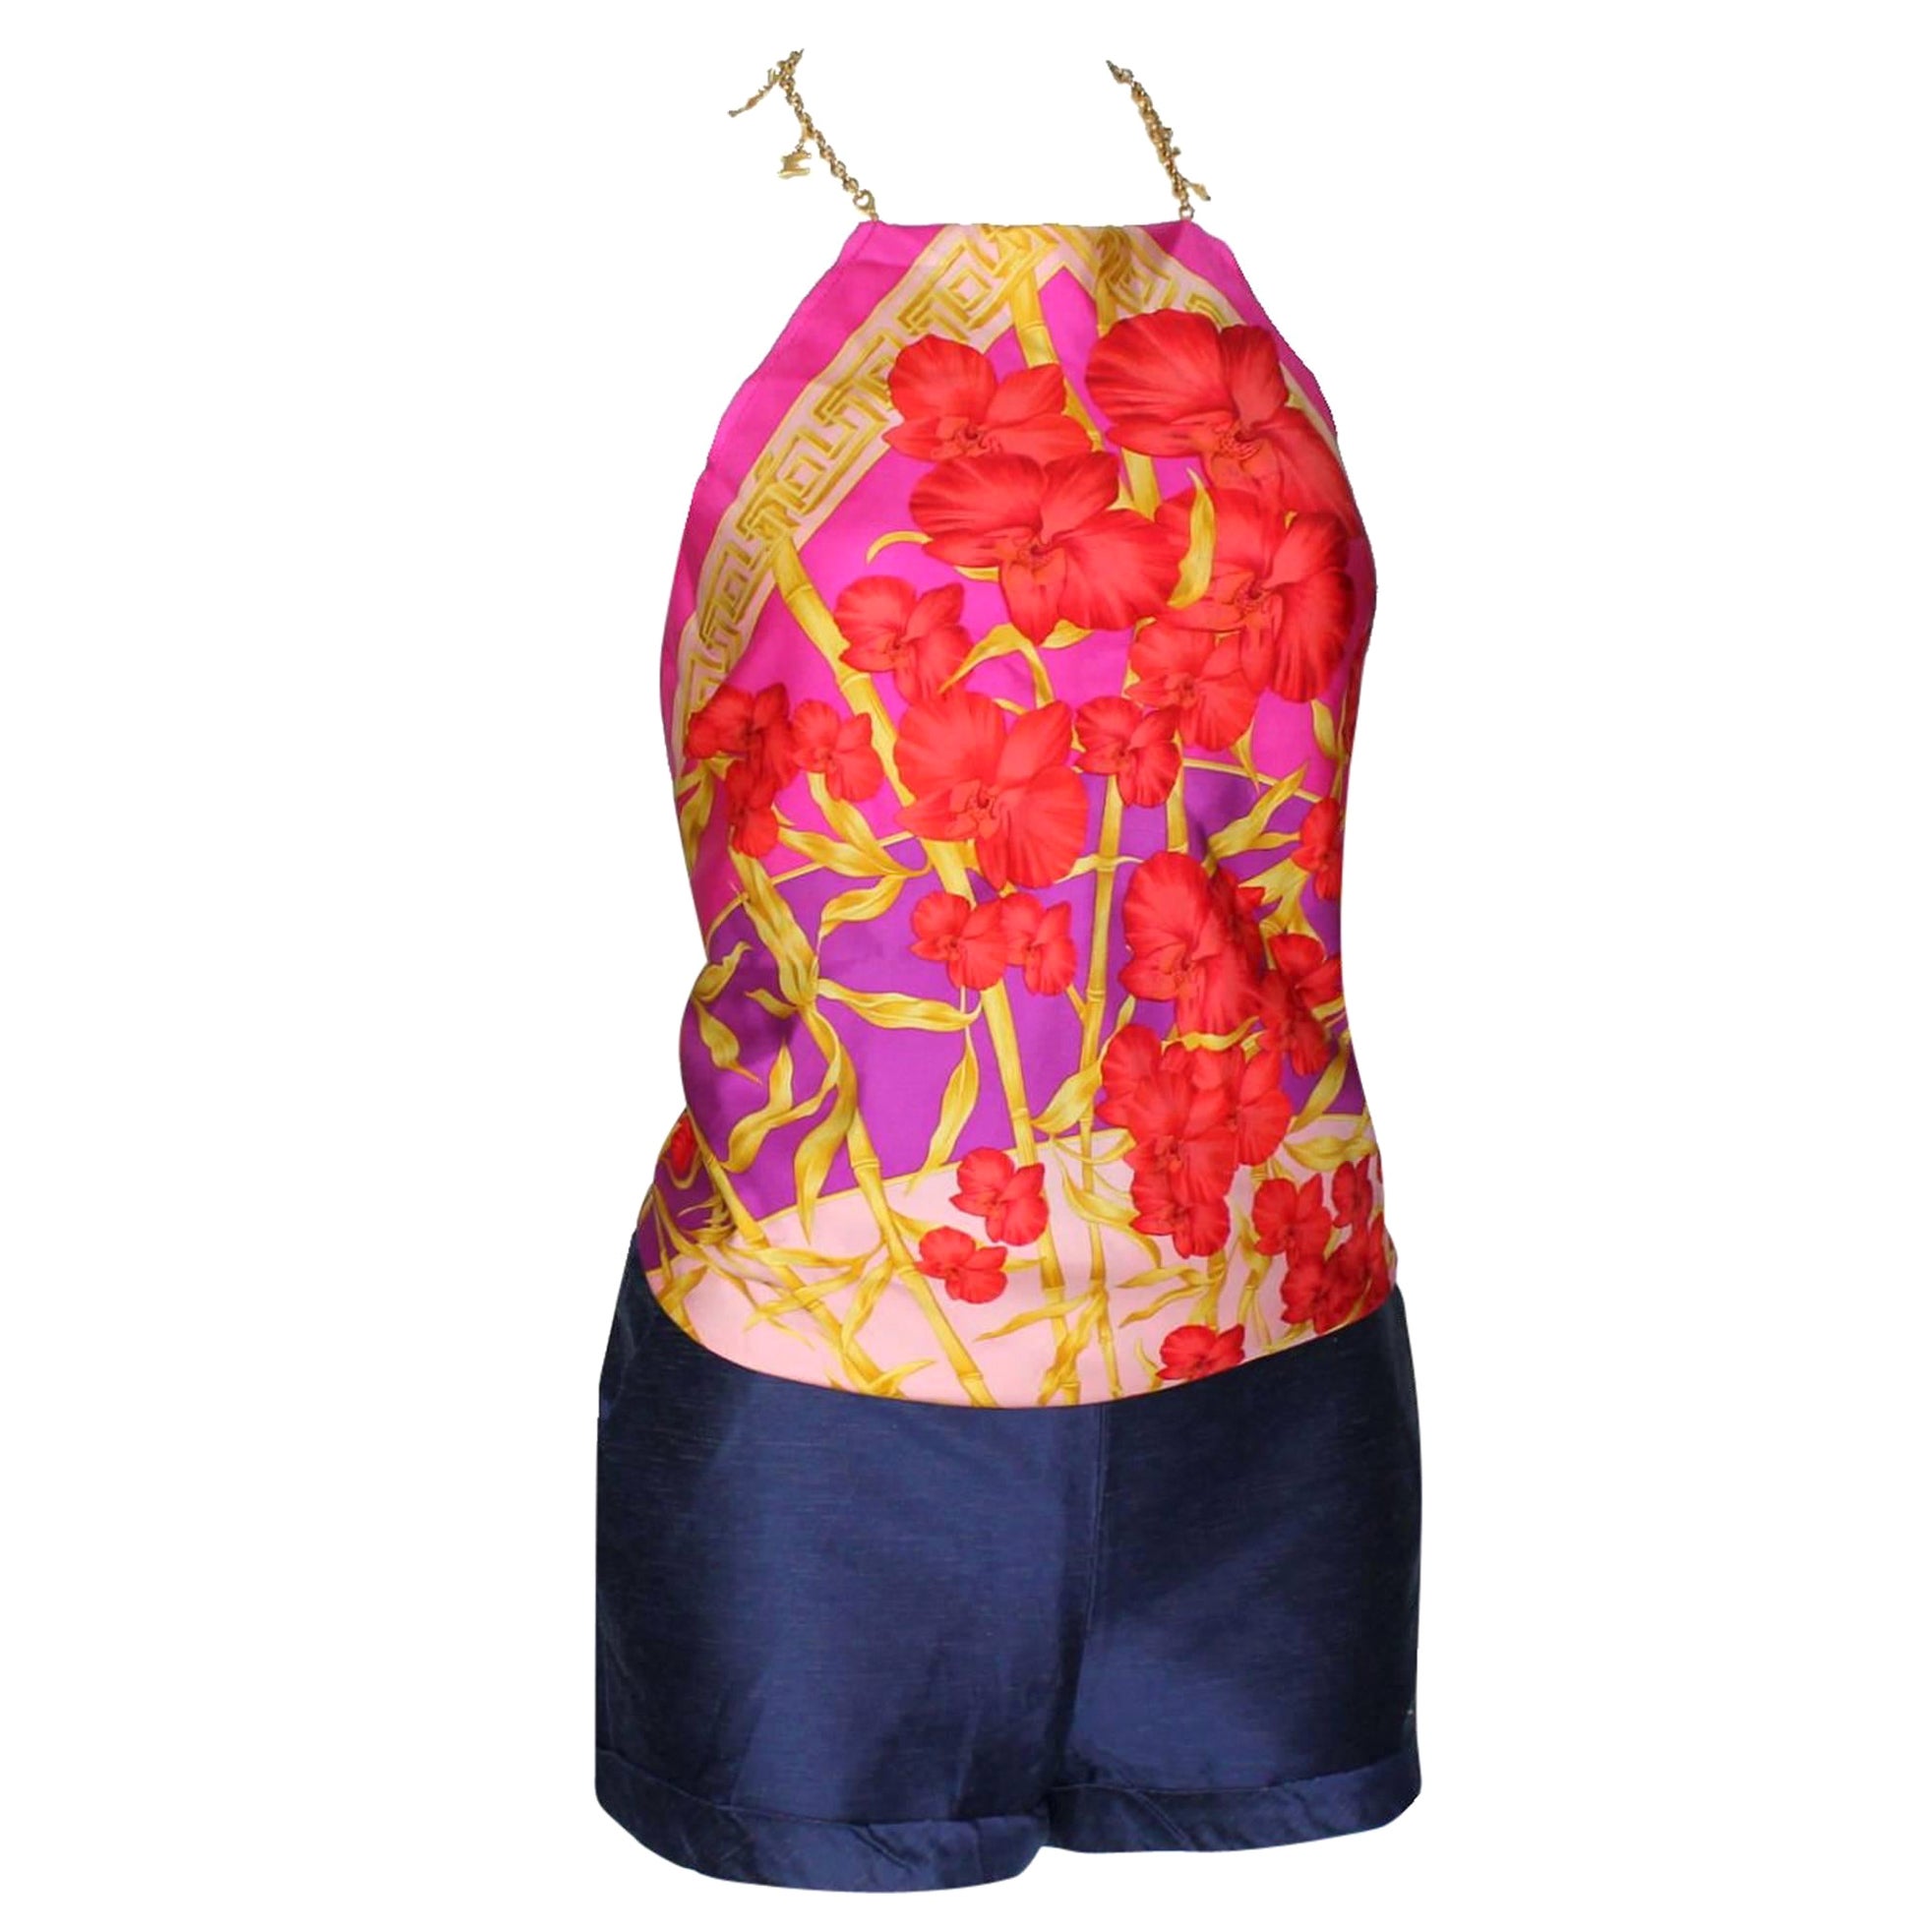 Gianni Versace Couture SS 2000 Jungle Palm Print Silk Top Dress Shorts 3 PCS Set